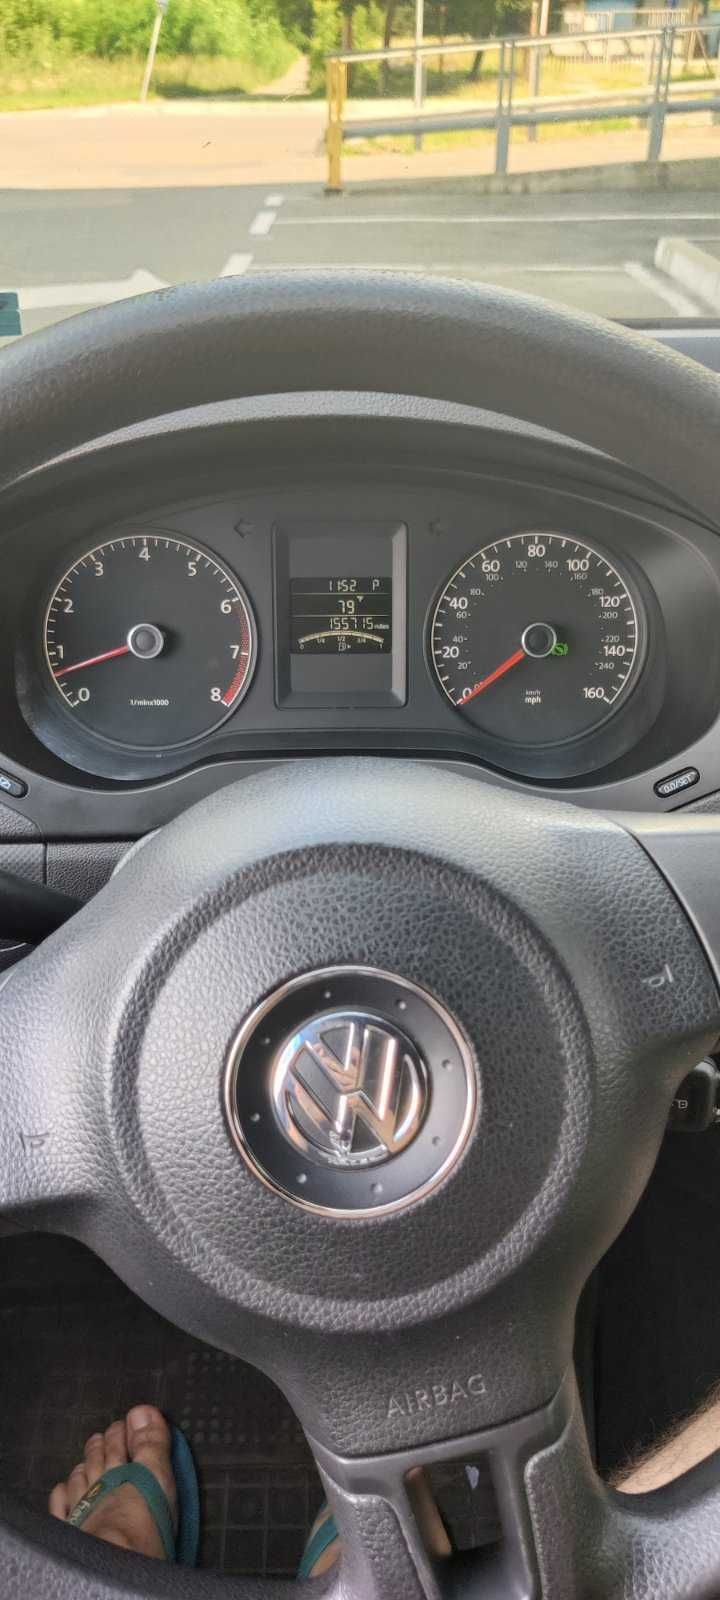 Продам Volkswagen Jetta